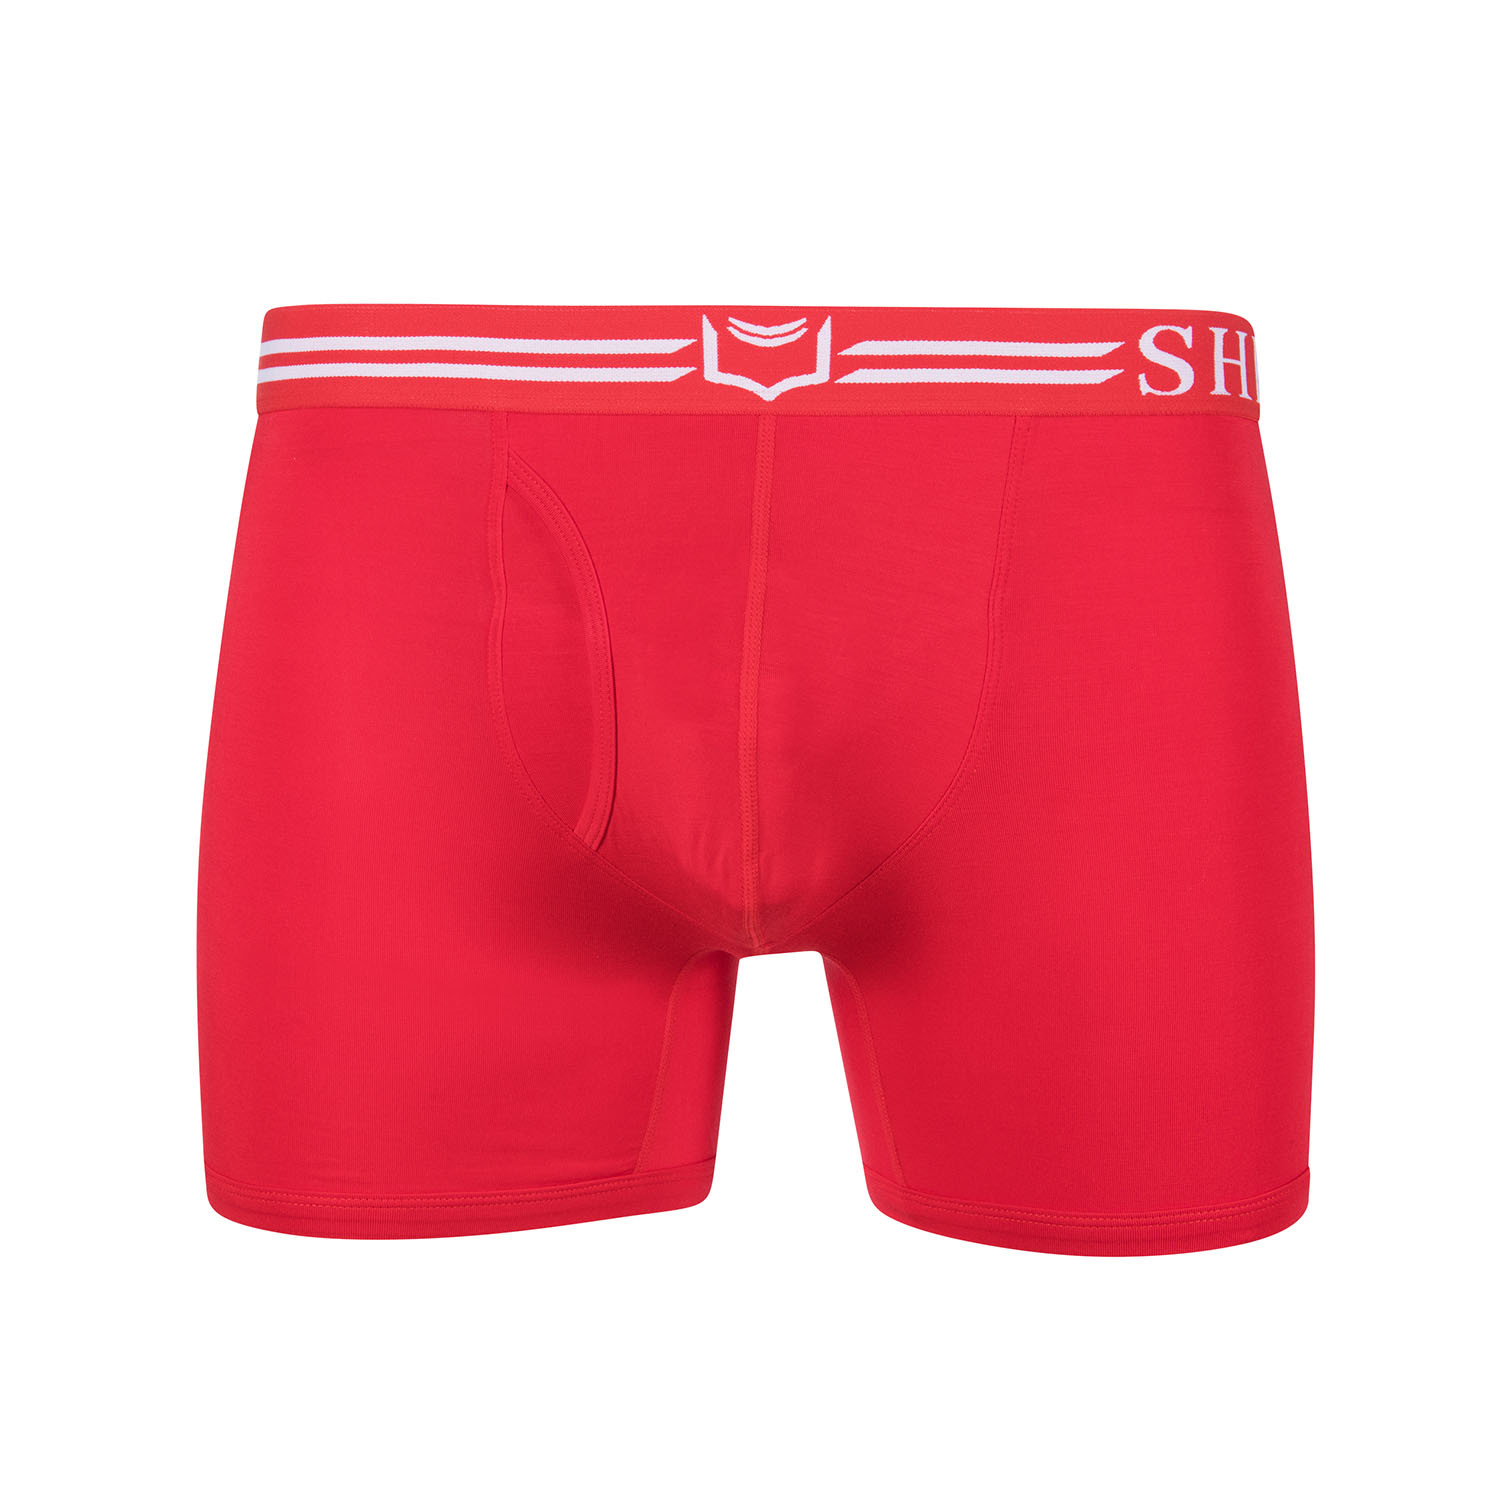 SHEATH 4.0 Men's Dual Pouch Boxer Brief // Red (XXX Large) - Sheath ...